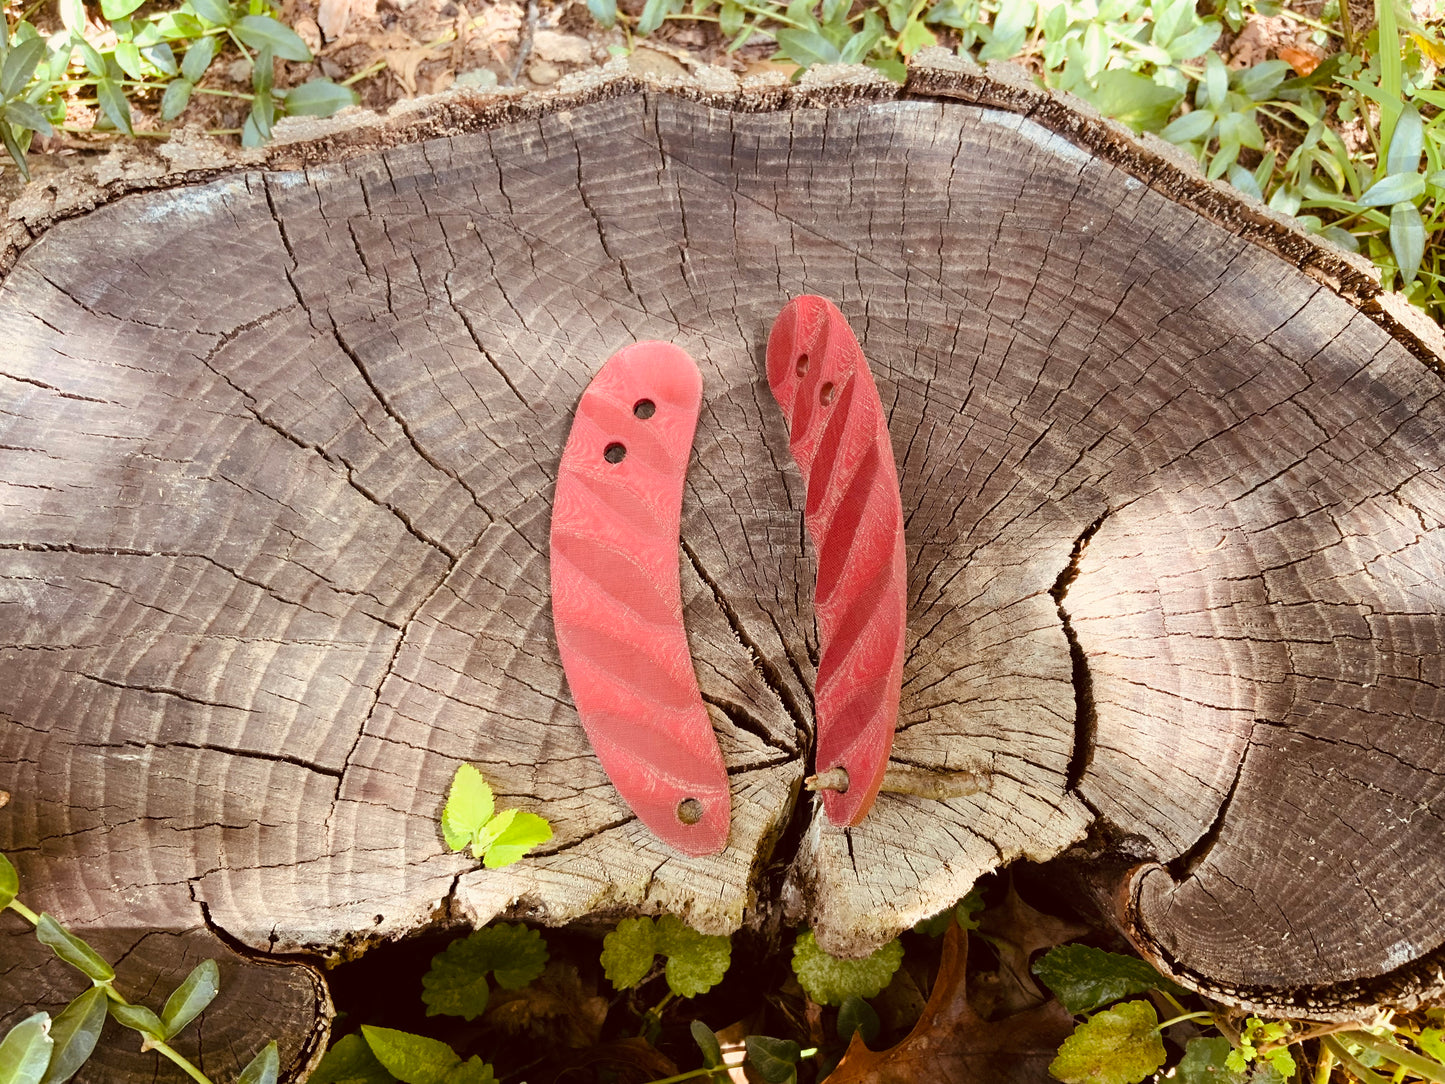 Red Linen icarta Scales for Woods Monkey Banana Peel Folding Knife